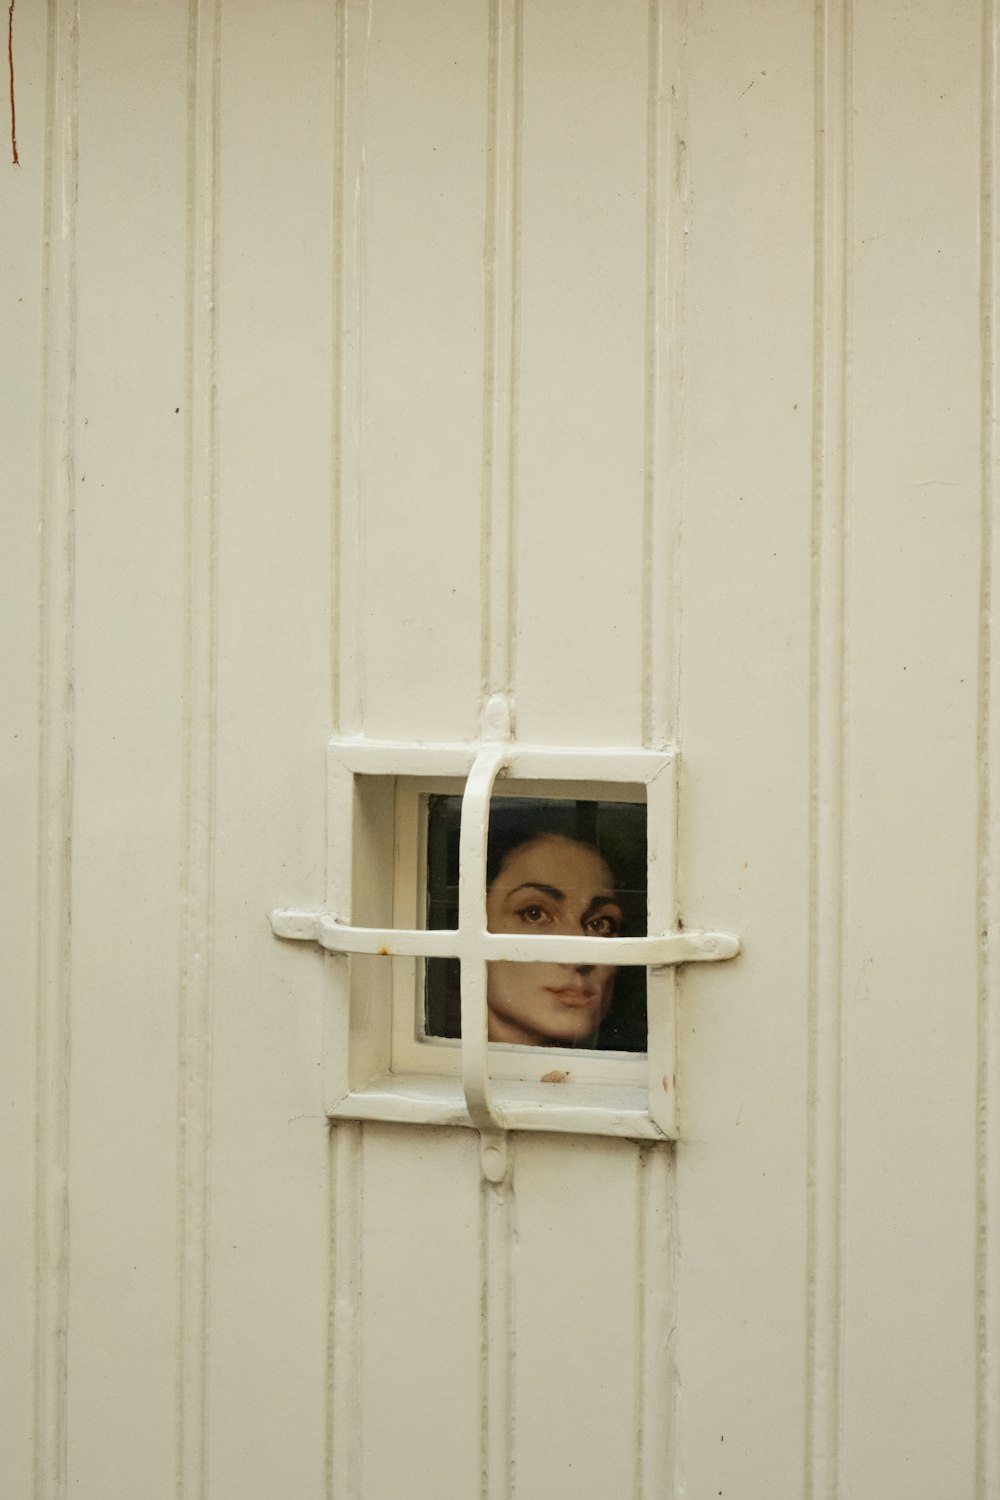 a woman's face is seen through a window